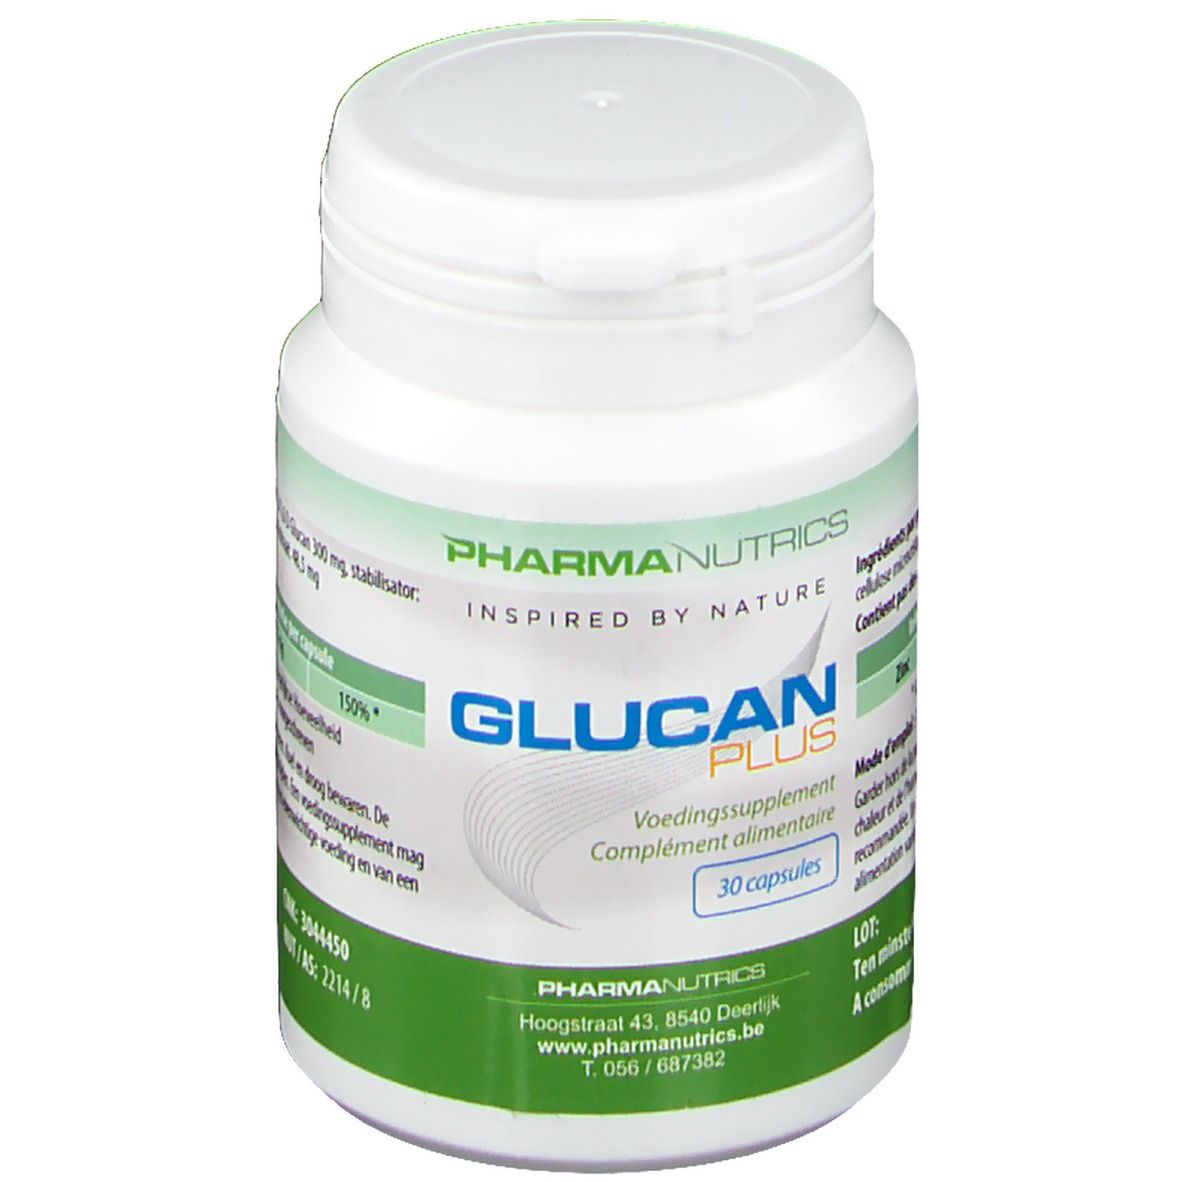 Pharmanutrics Glucan Plus